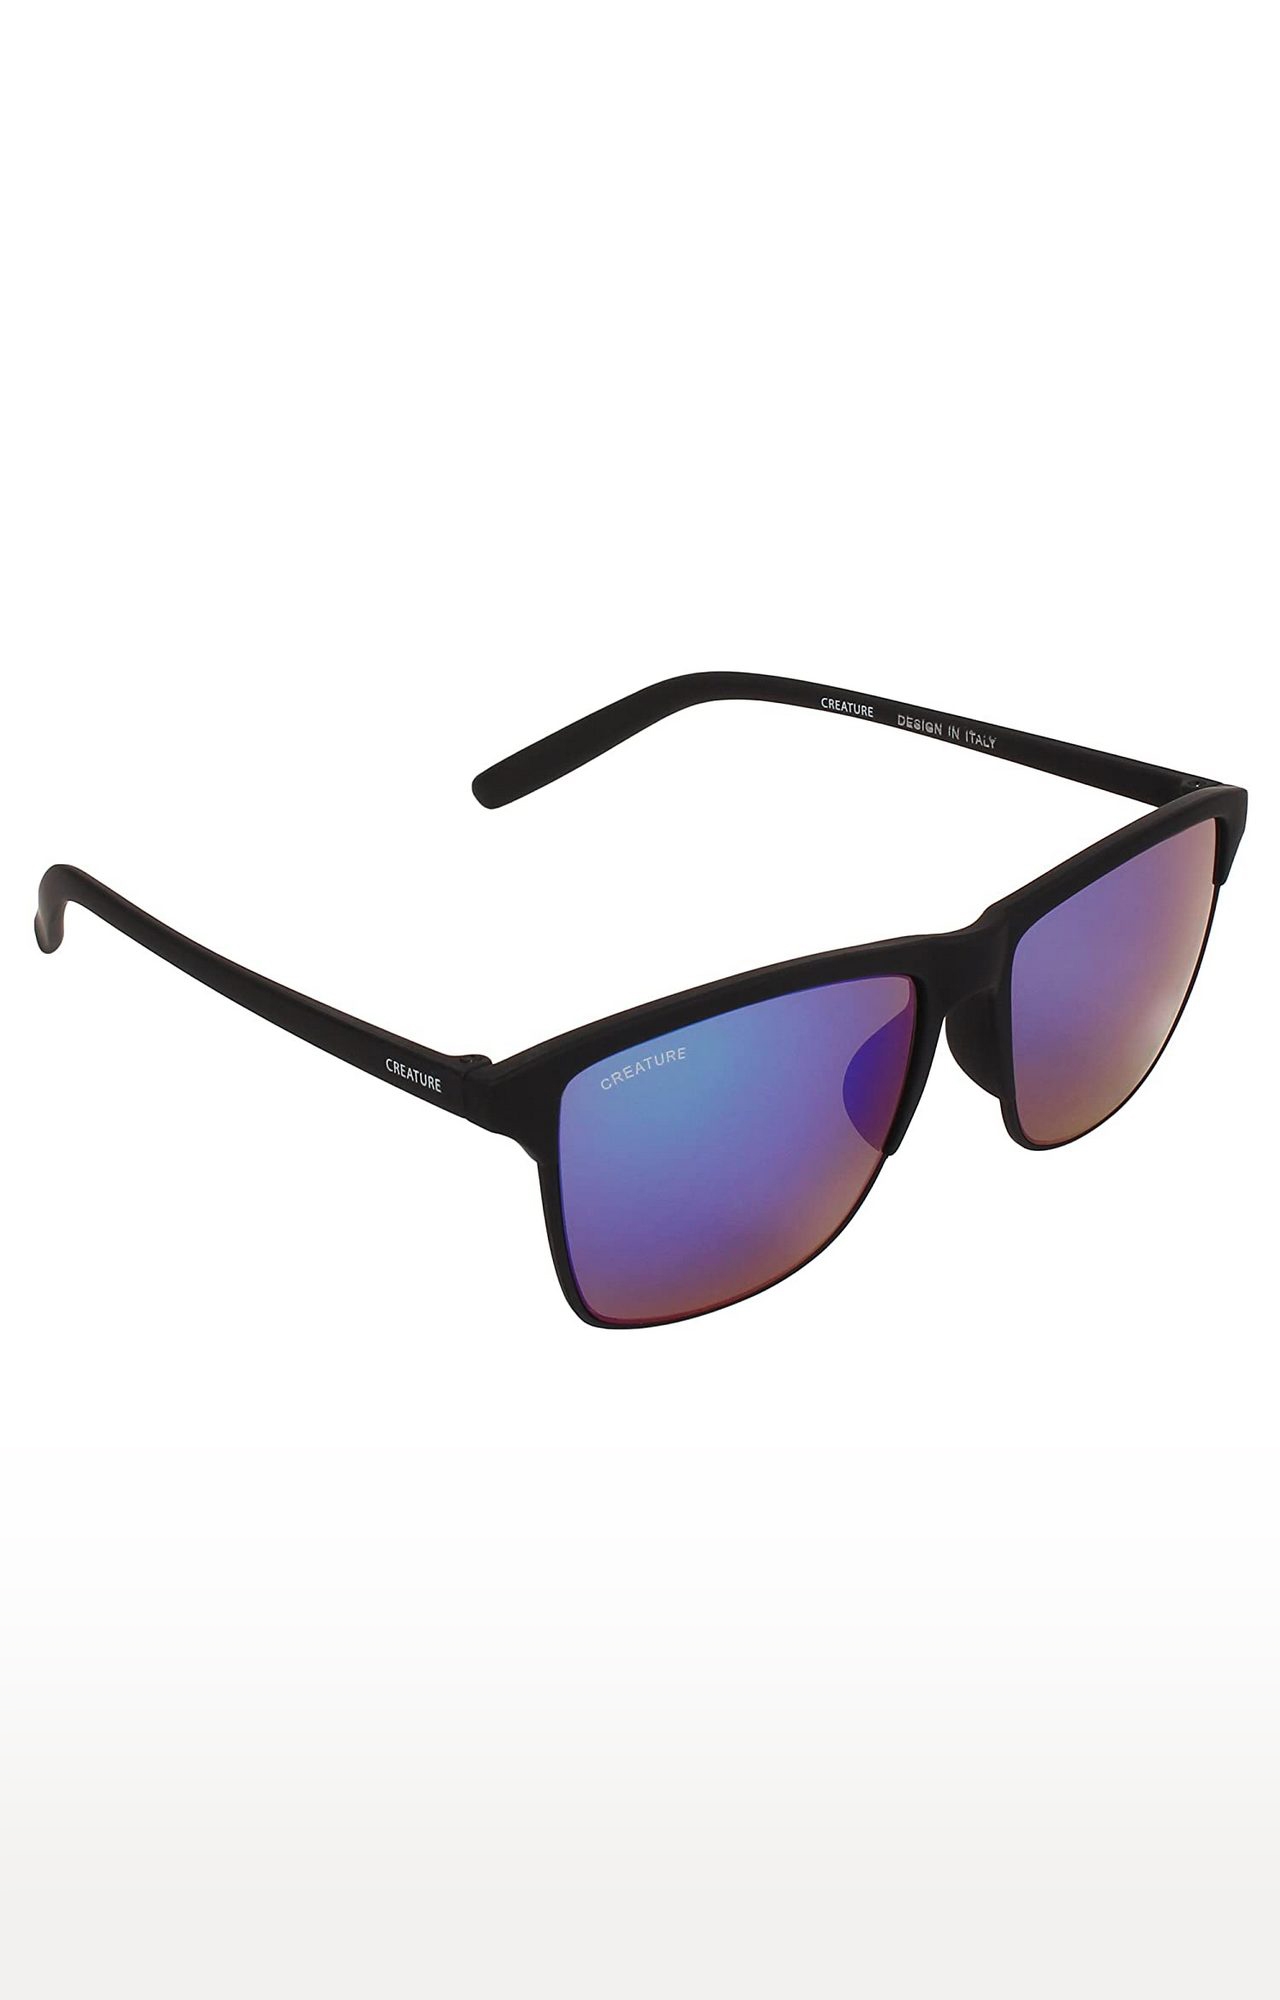 CREATURE | CREATURE Green & Multicolour Aviator Sunglasses Combo with UV Protection (Lens-Green & Multicolour|Frame-Grey & Black) 2